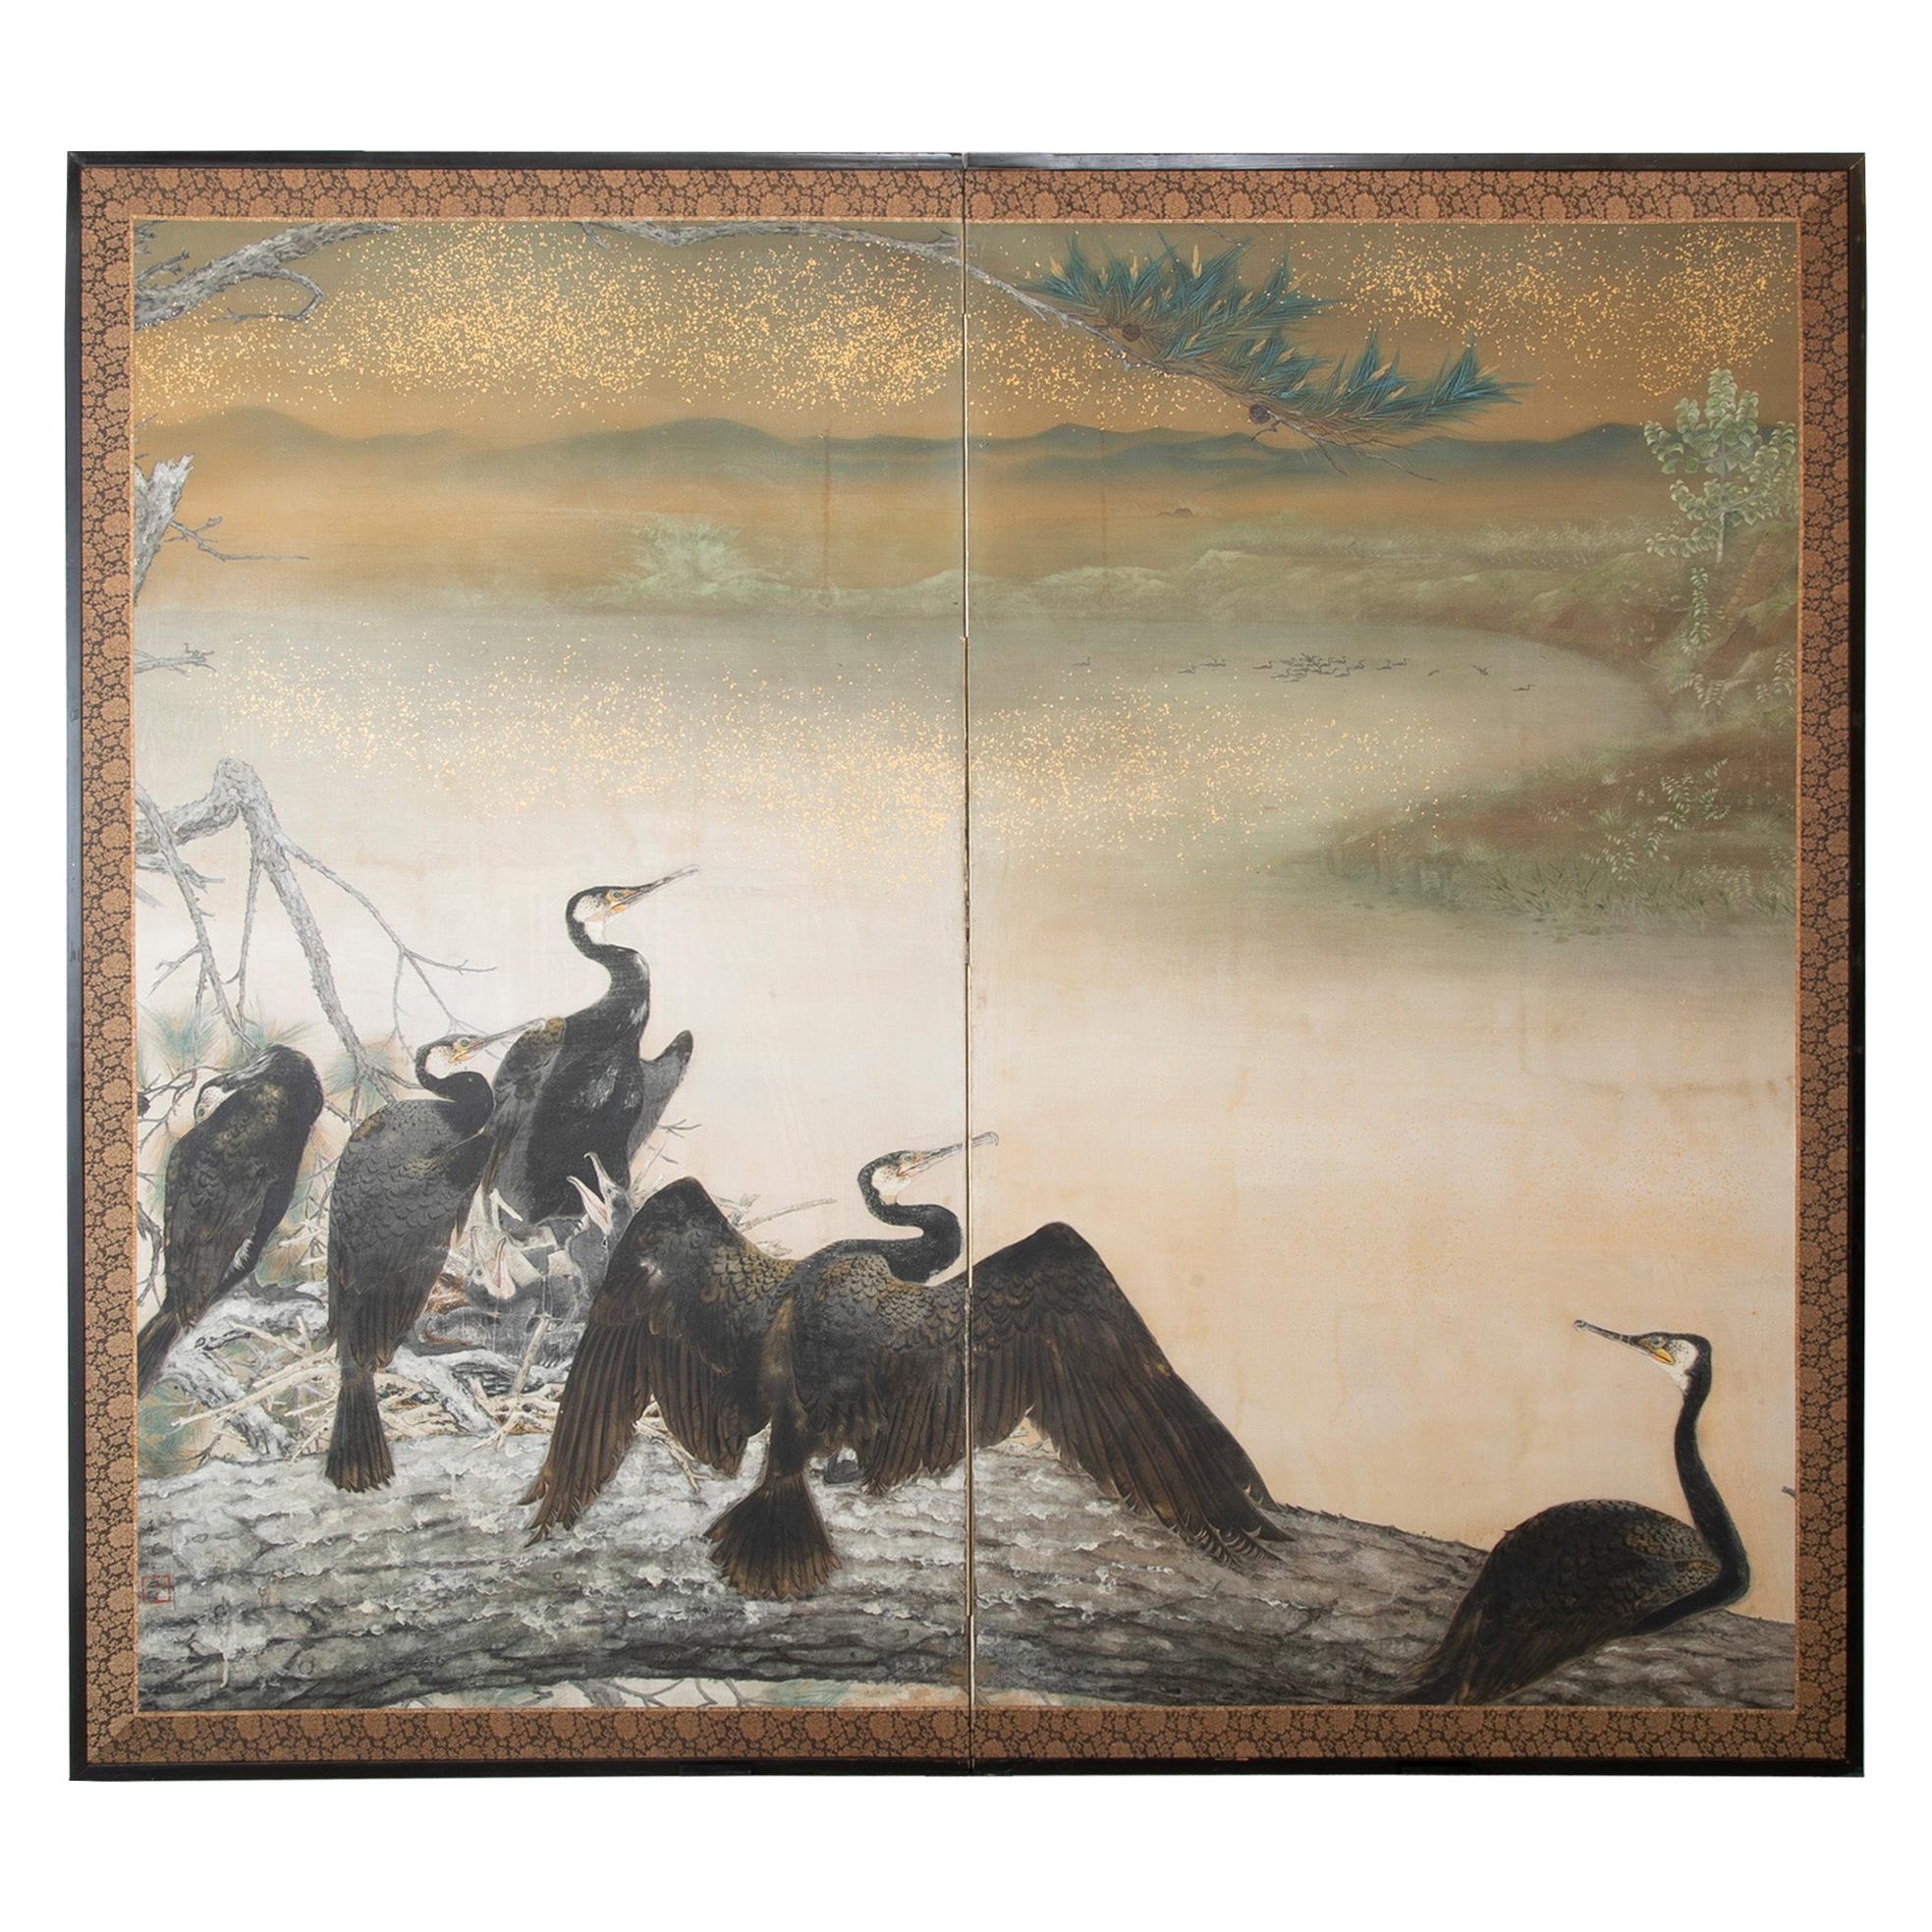 Taisho Period Painted Silk Screen Depicting Nesting Cormorants by Asami Joujou